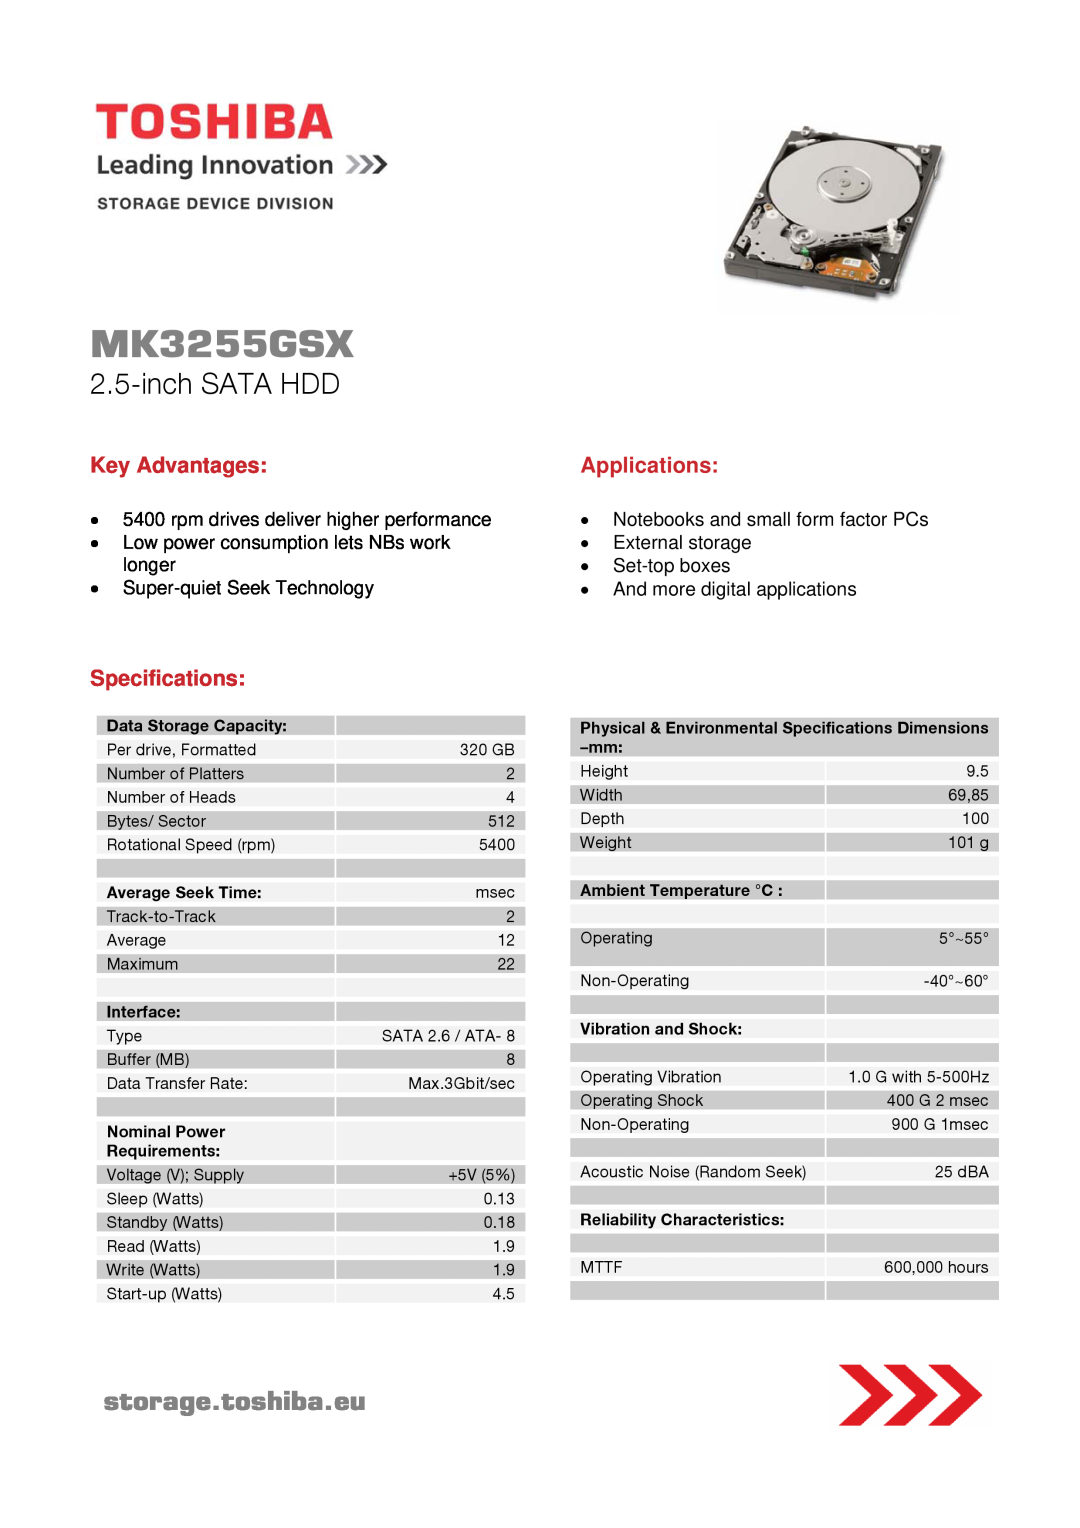 Toshiba MK3255GSX specifications inch SATA HDD, storage.toshiba.eu, Key Advantages, Applications, Specifications, longer 